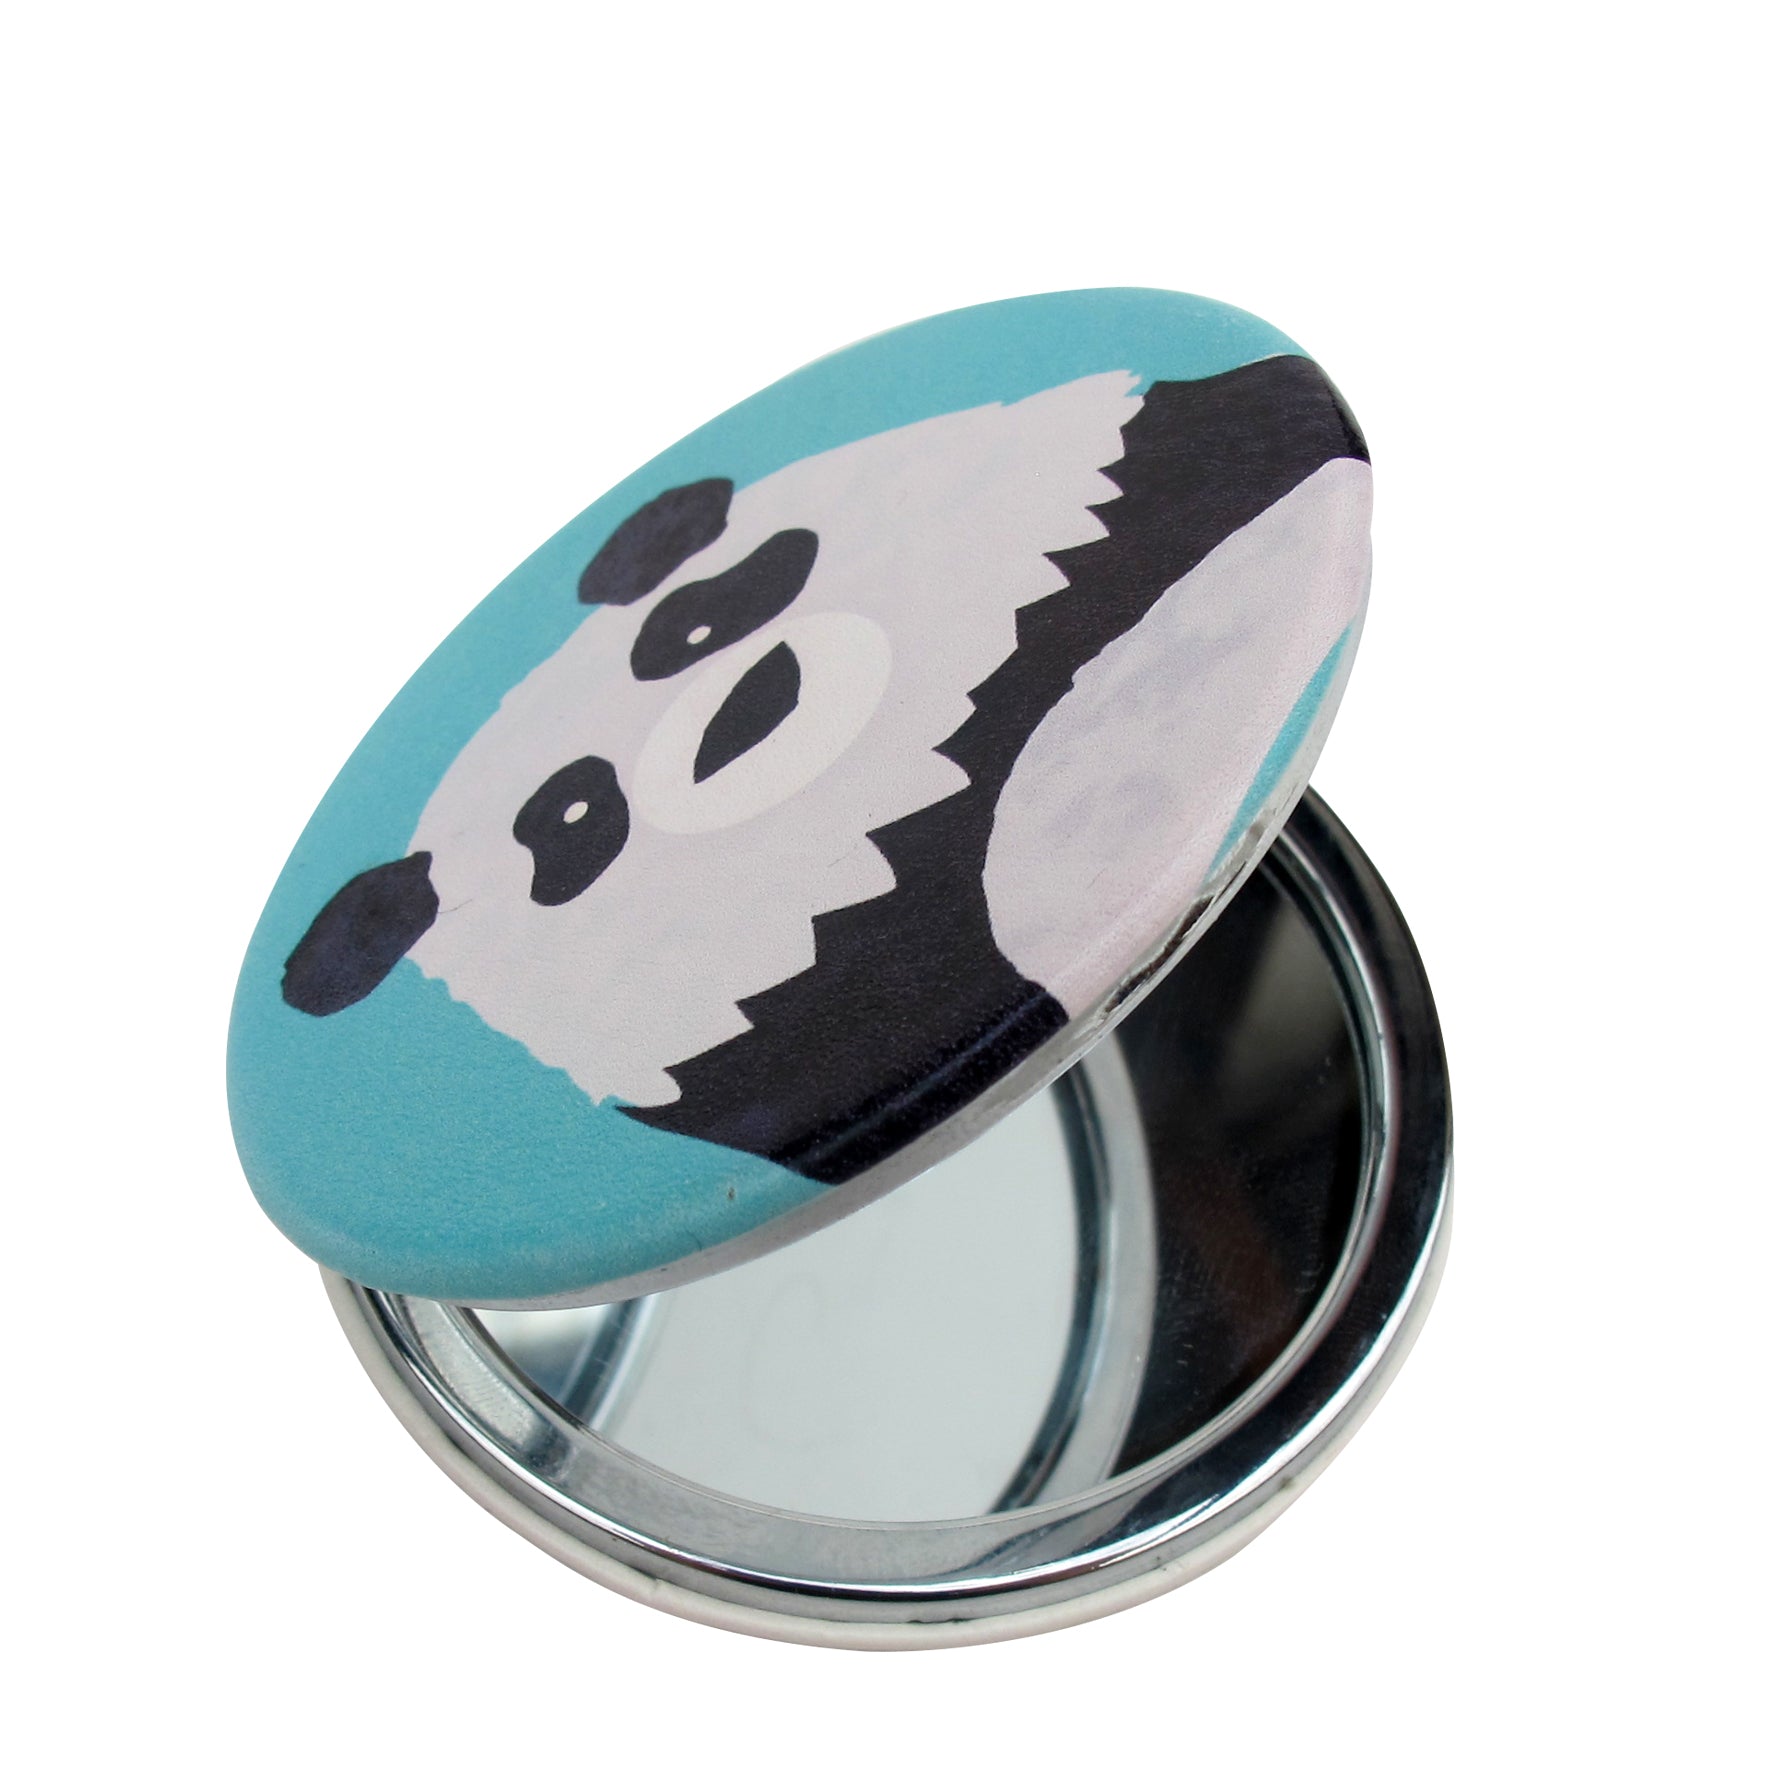 Penny Black "Panda" Compact Mirror